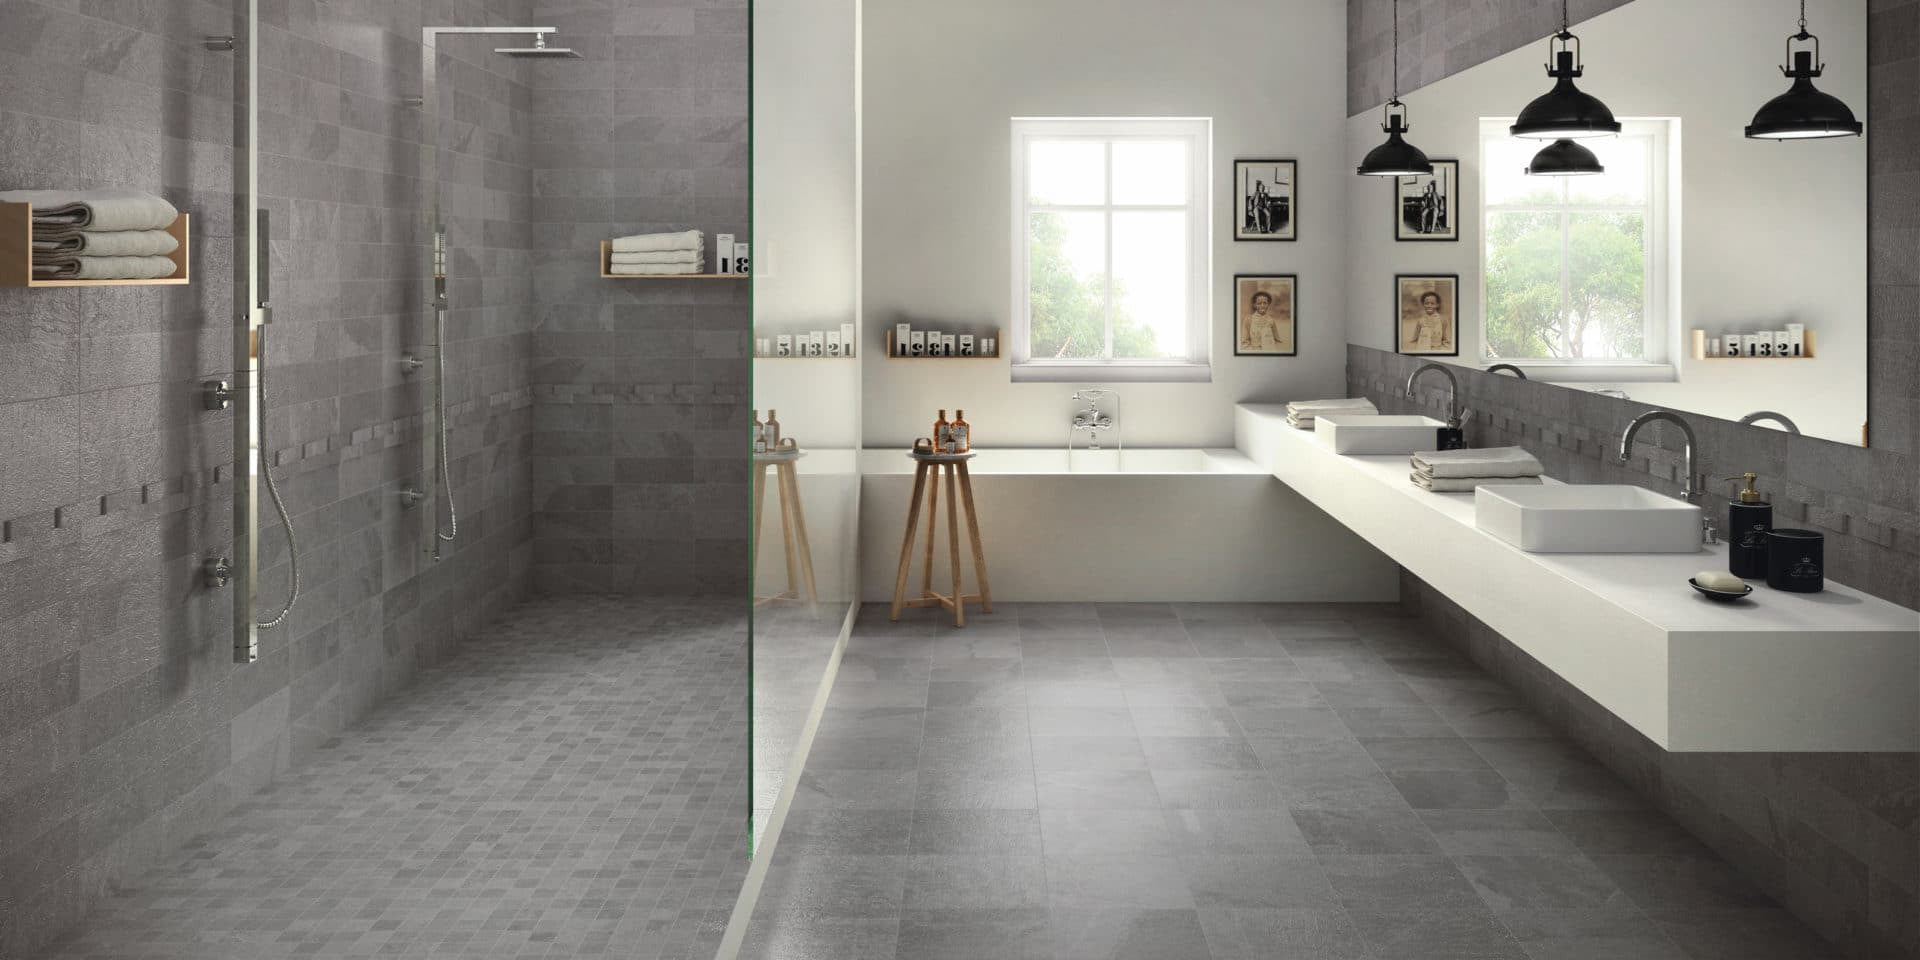 Gray Slide 24×24 Porcelain Tile on Bathroom Floor and Wall